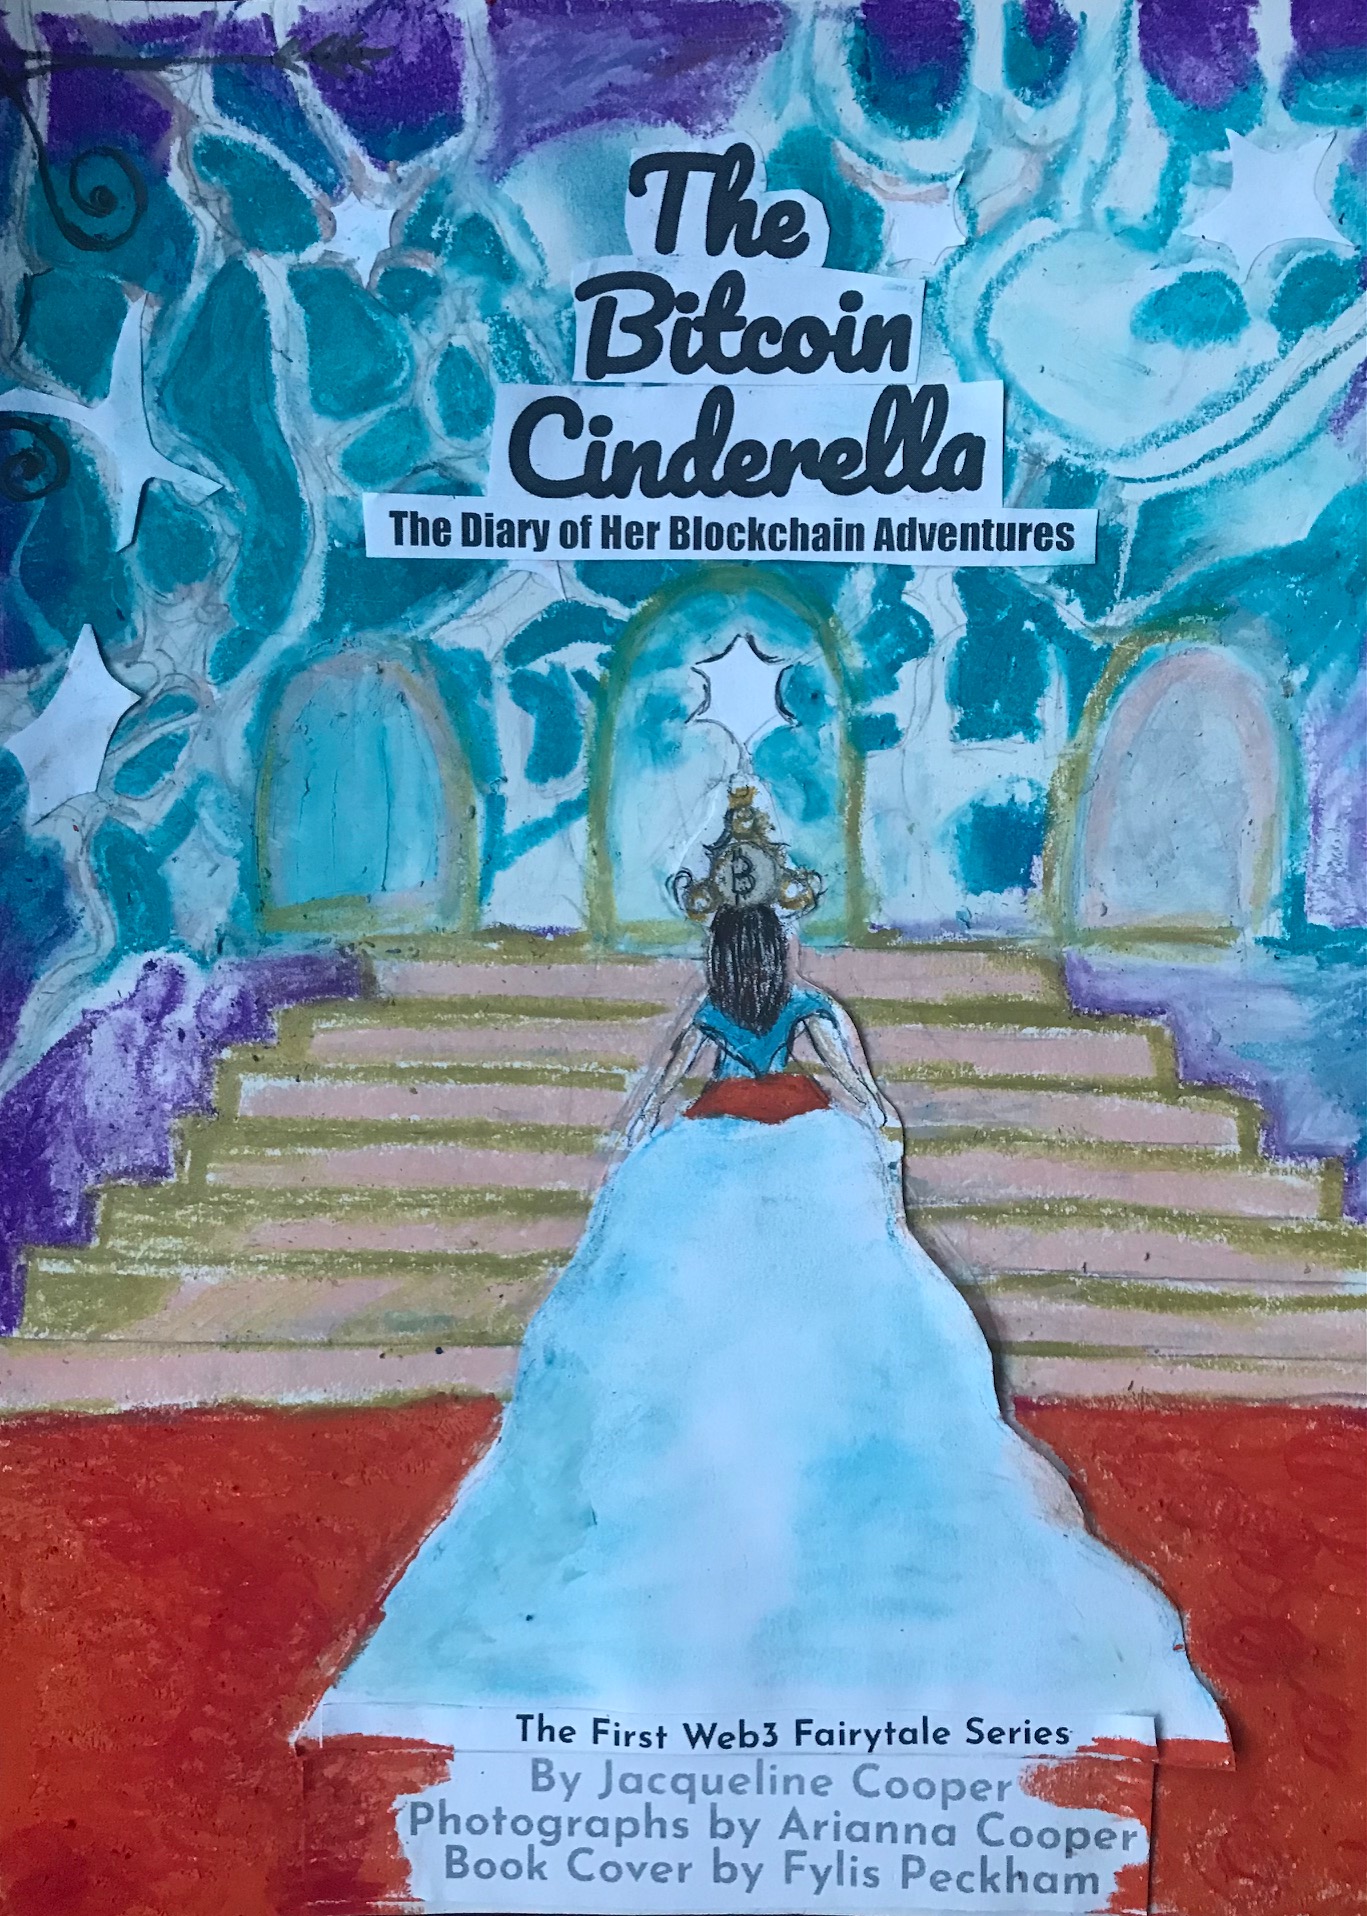 Her Blockchain Adventures - Book 1